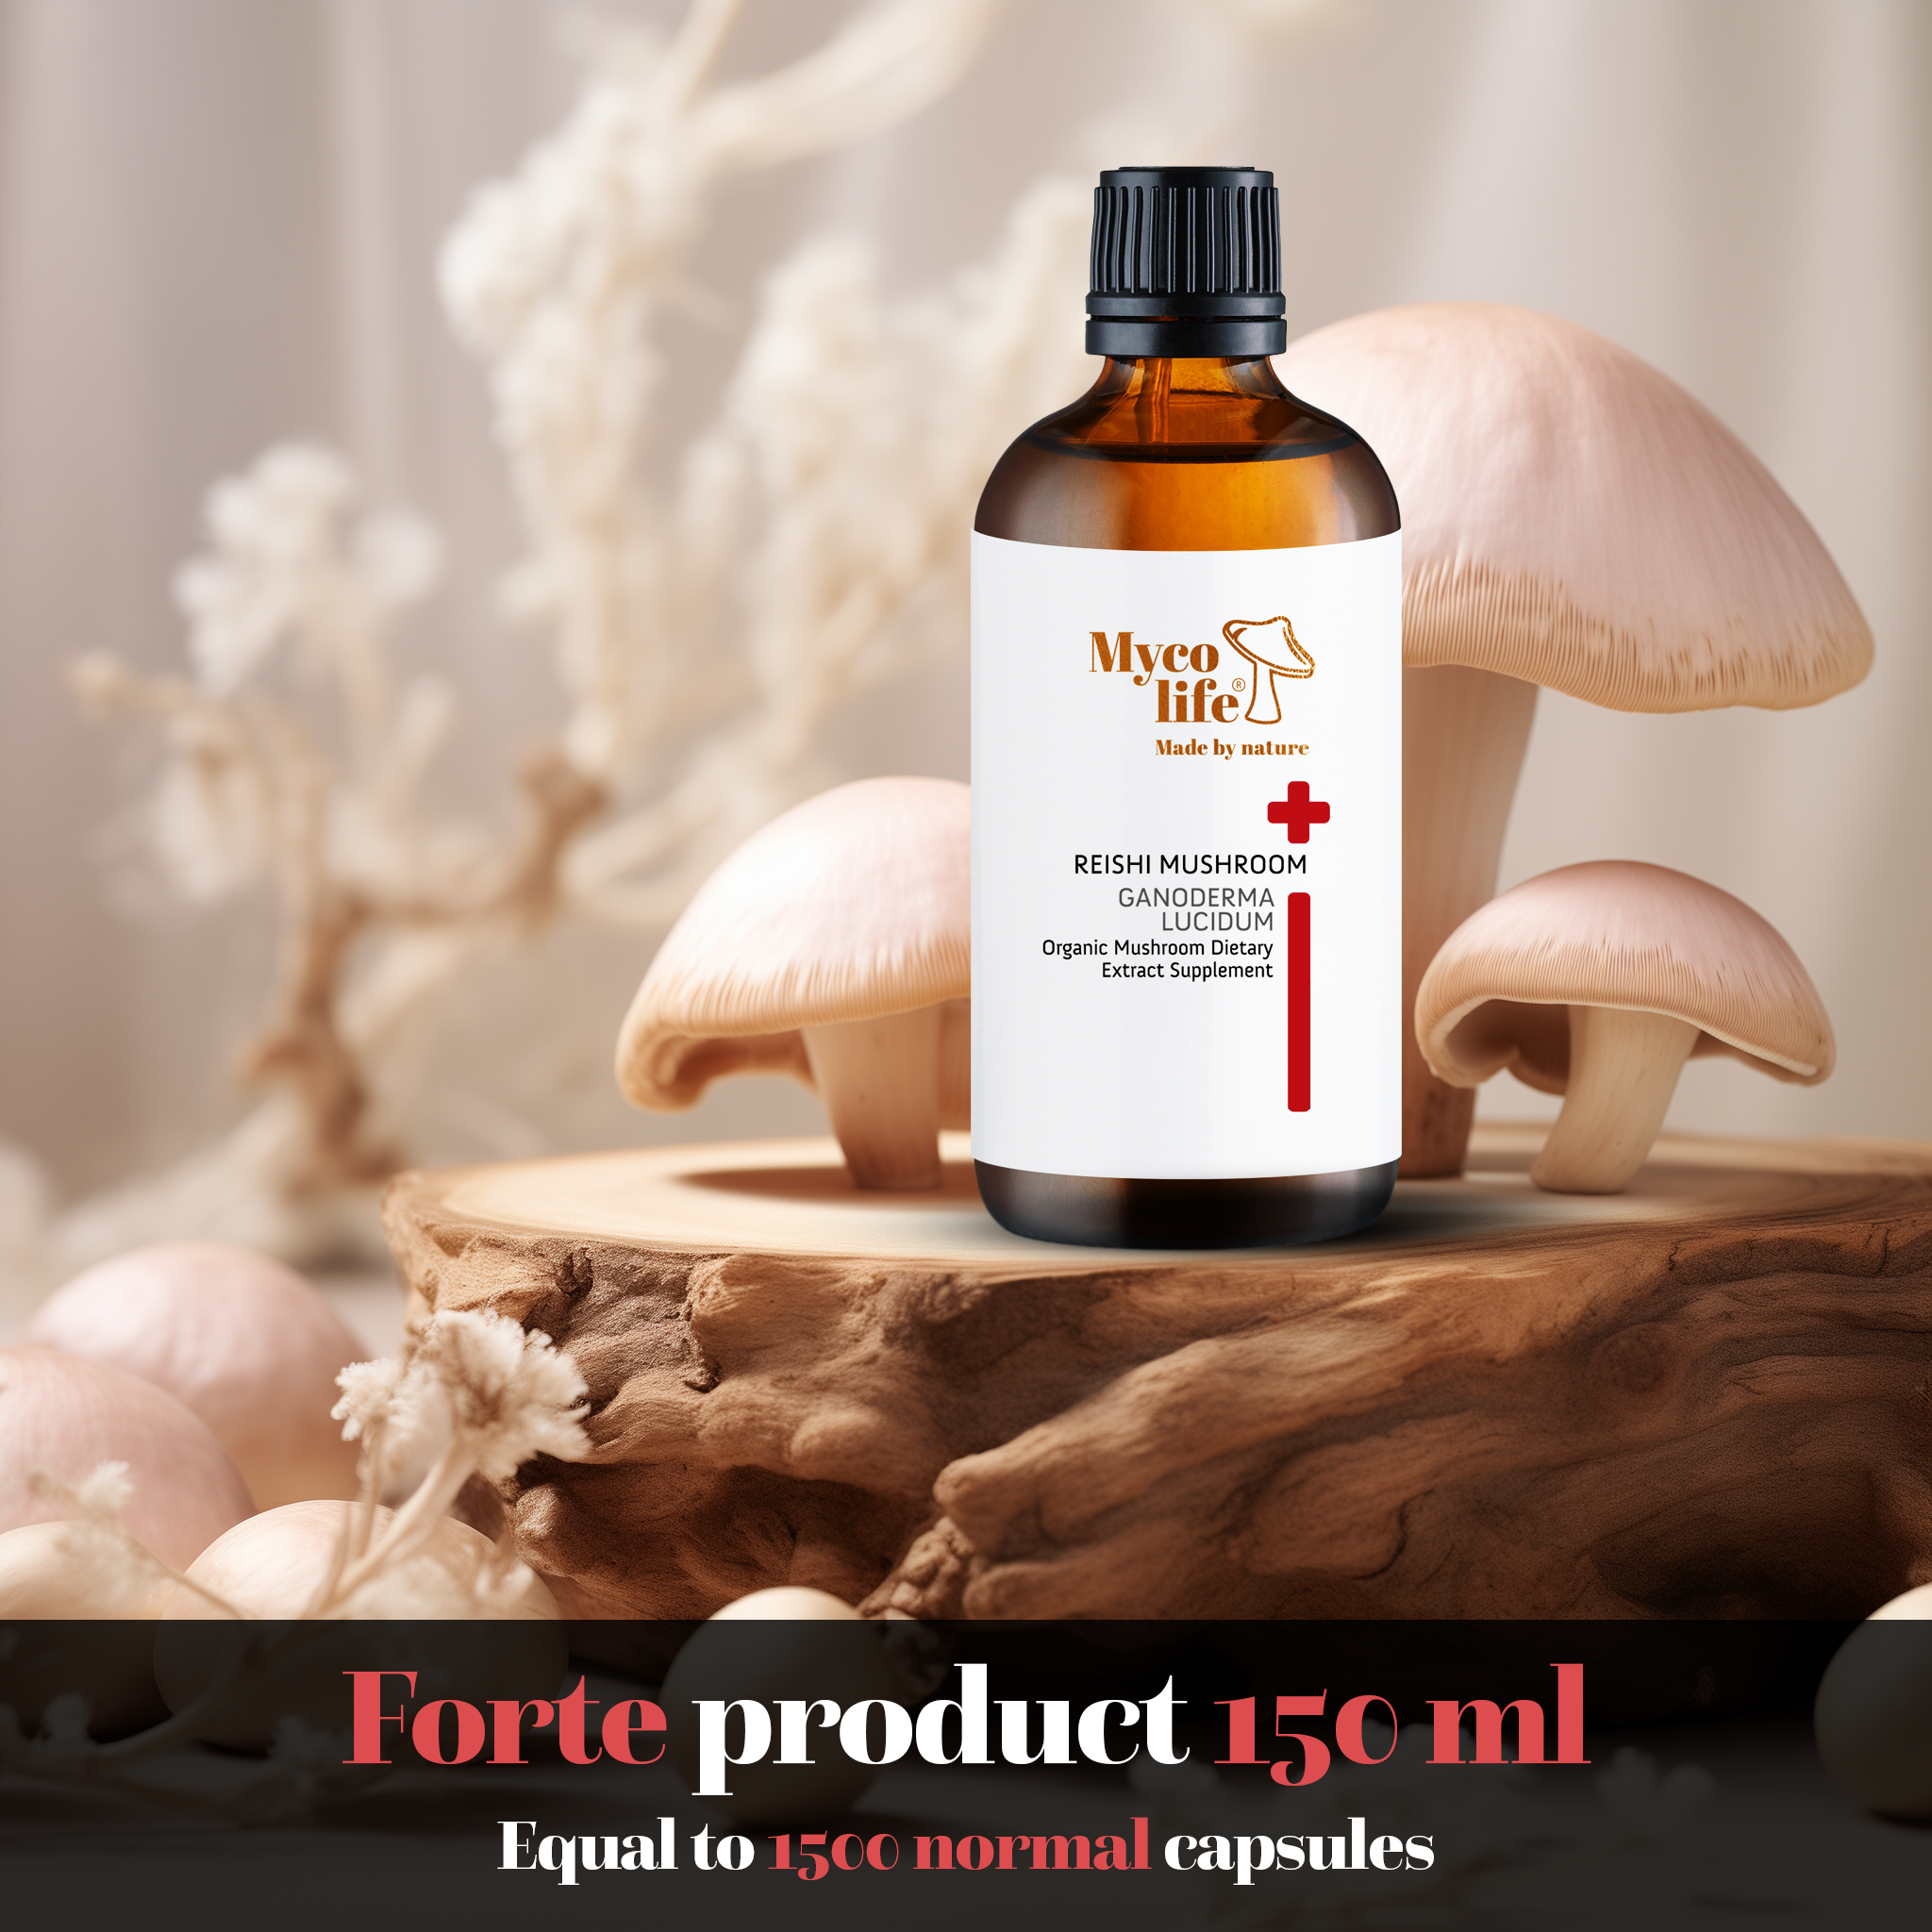 Extrait de champignon Reishi Forte-150ml